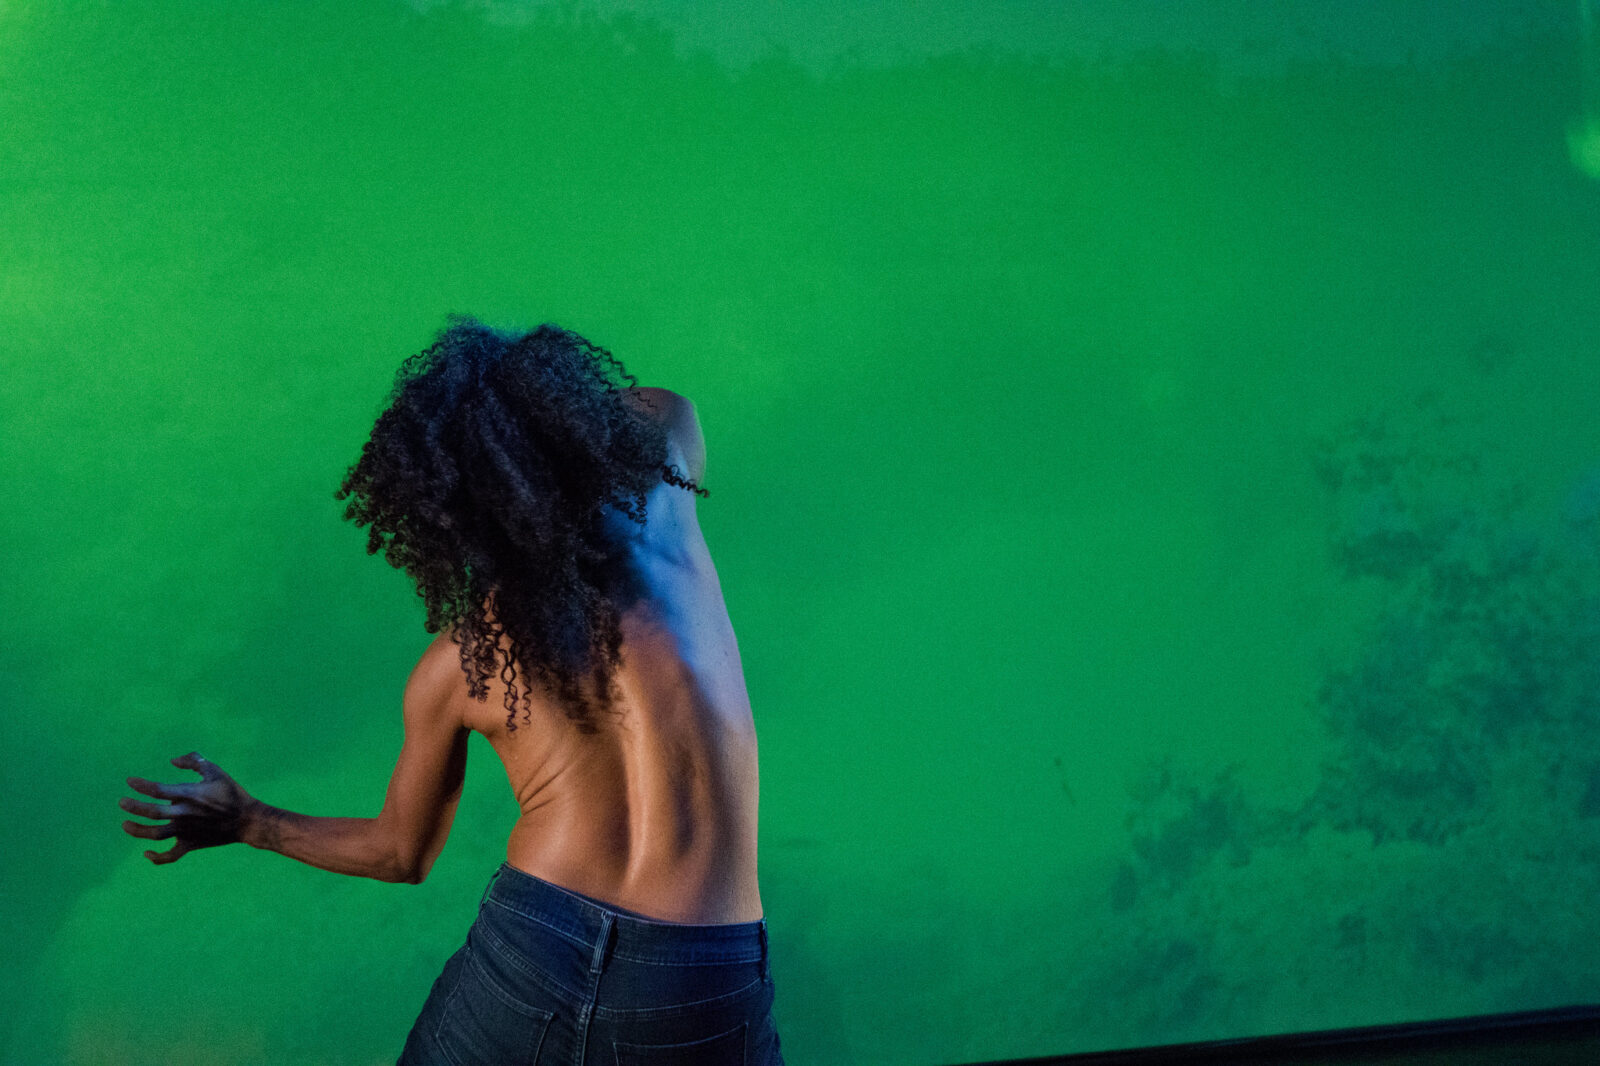 Dancer's bare back against a green screen